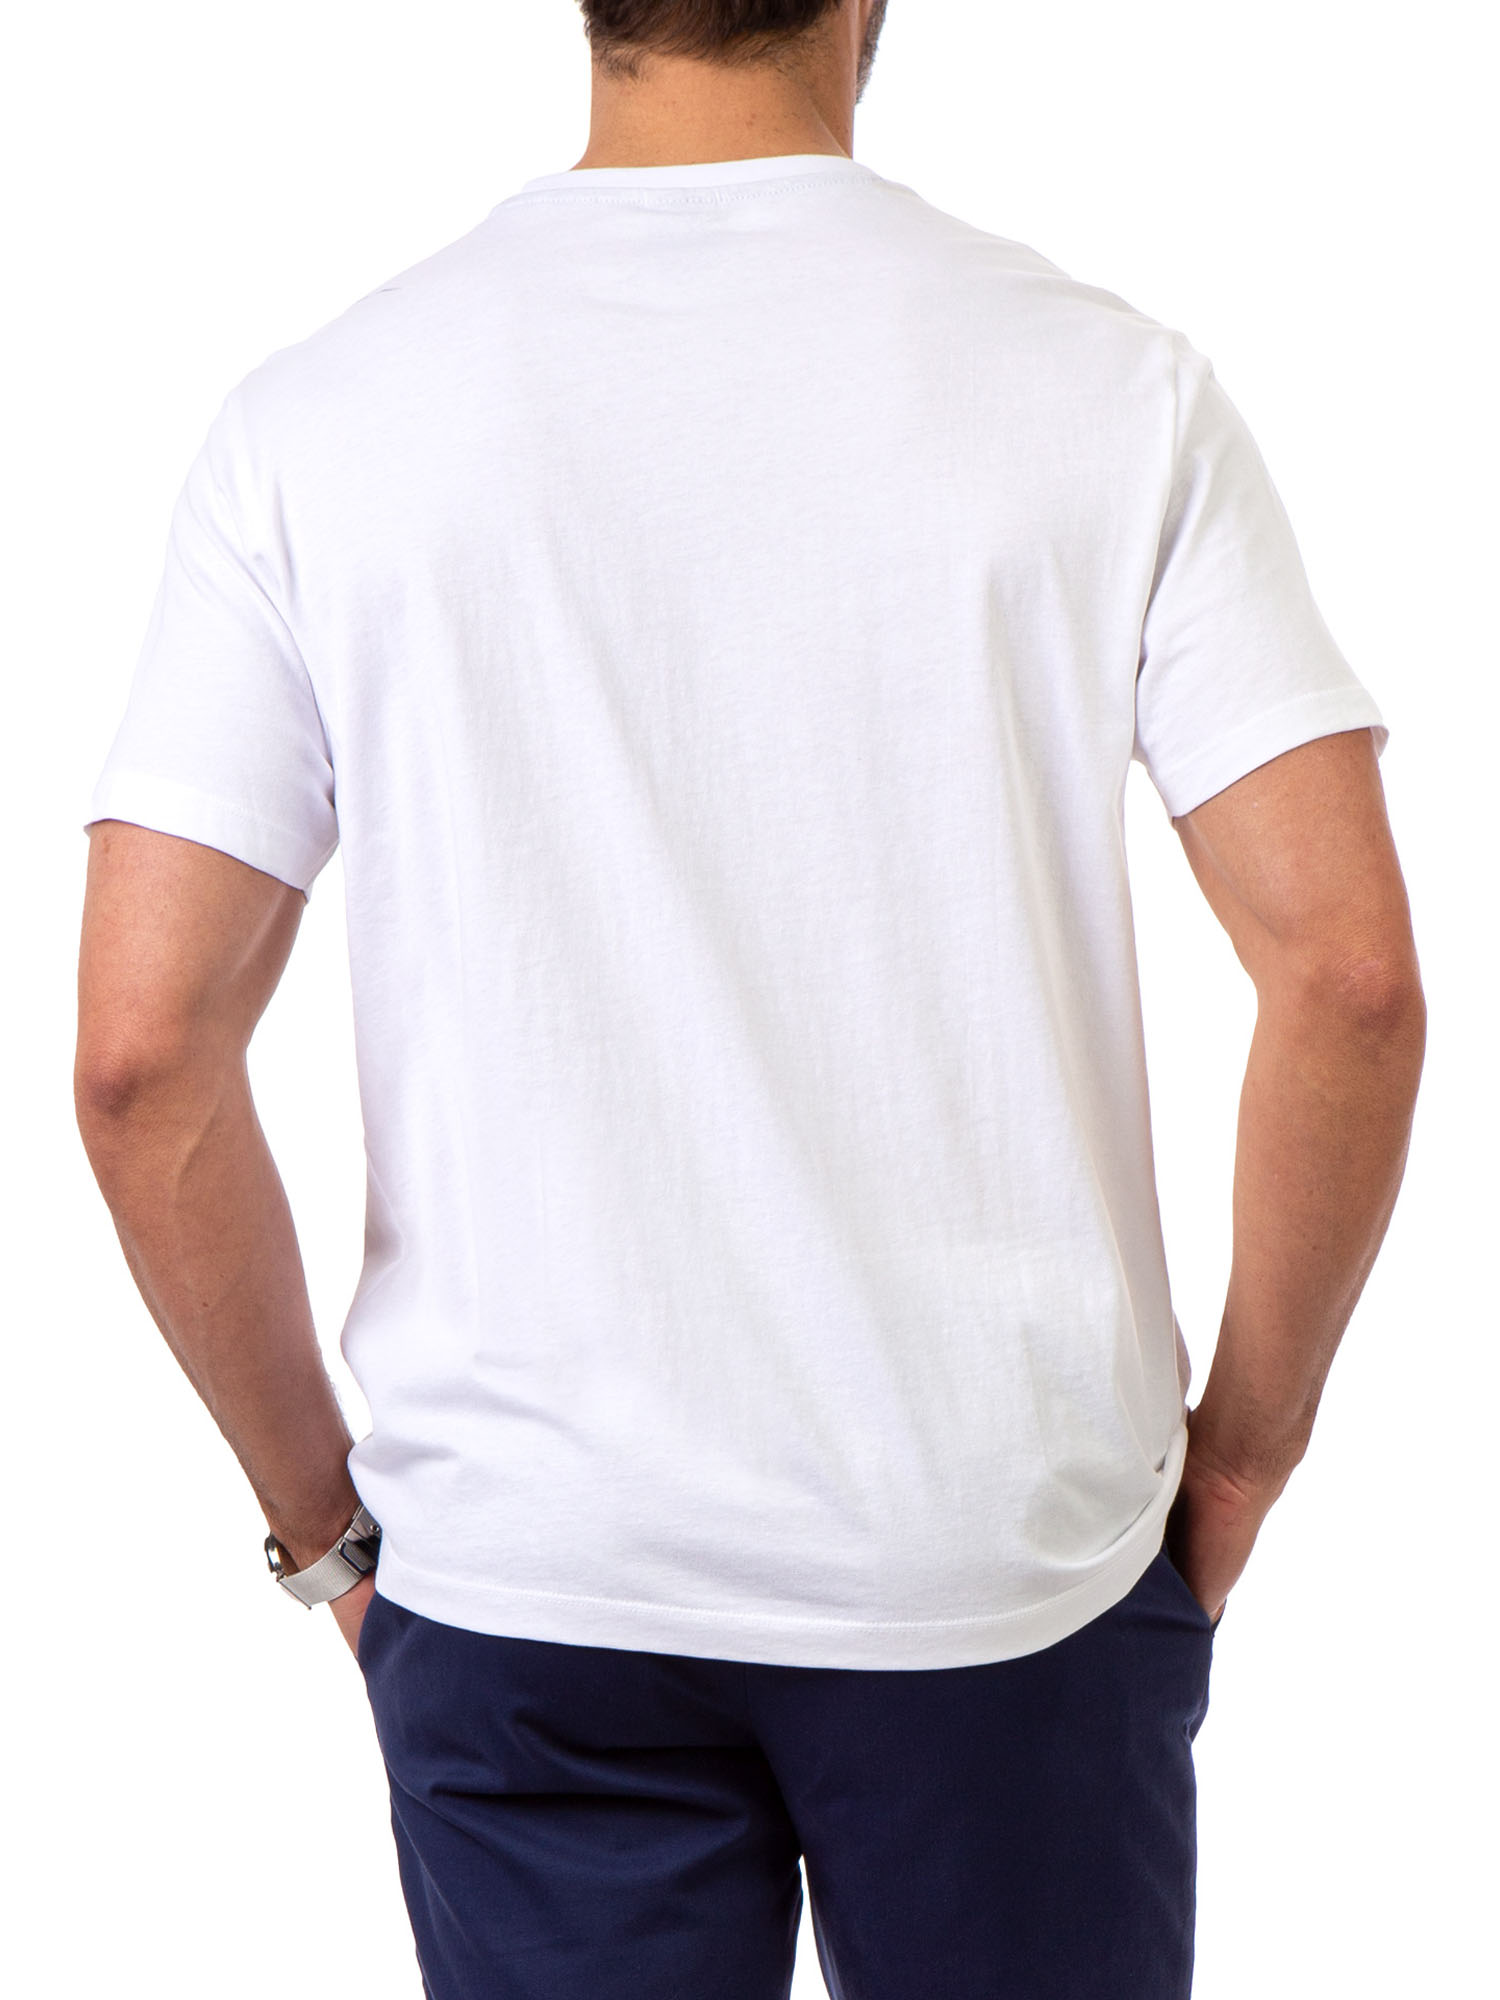 U.S. Polo Assn. Men's Short Sleeve Printed T-Shirt - image 3 of 4